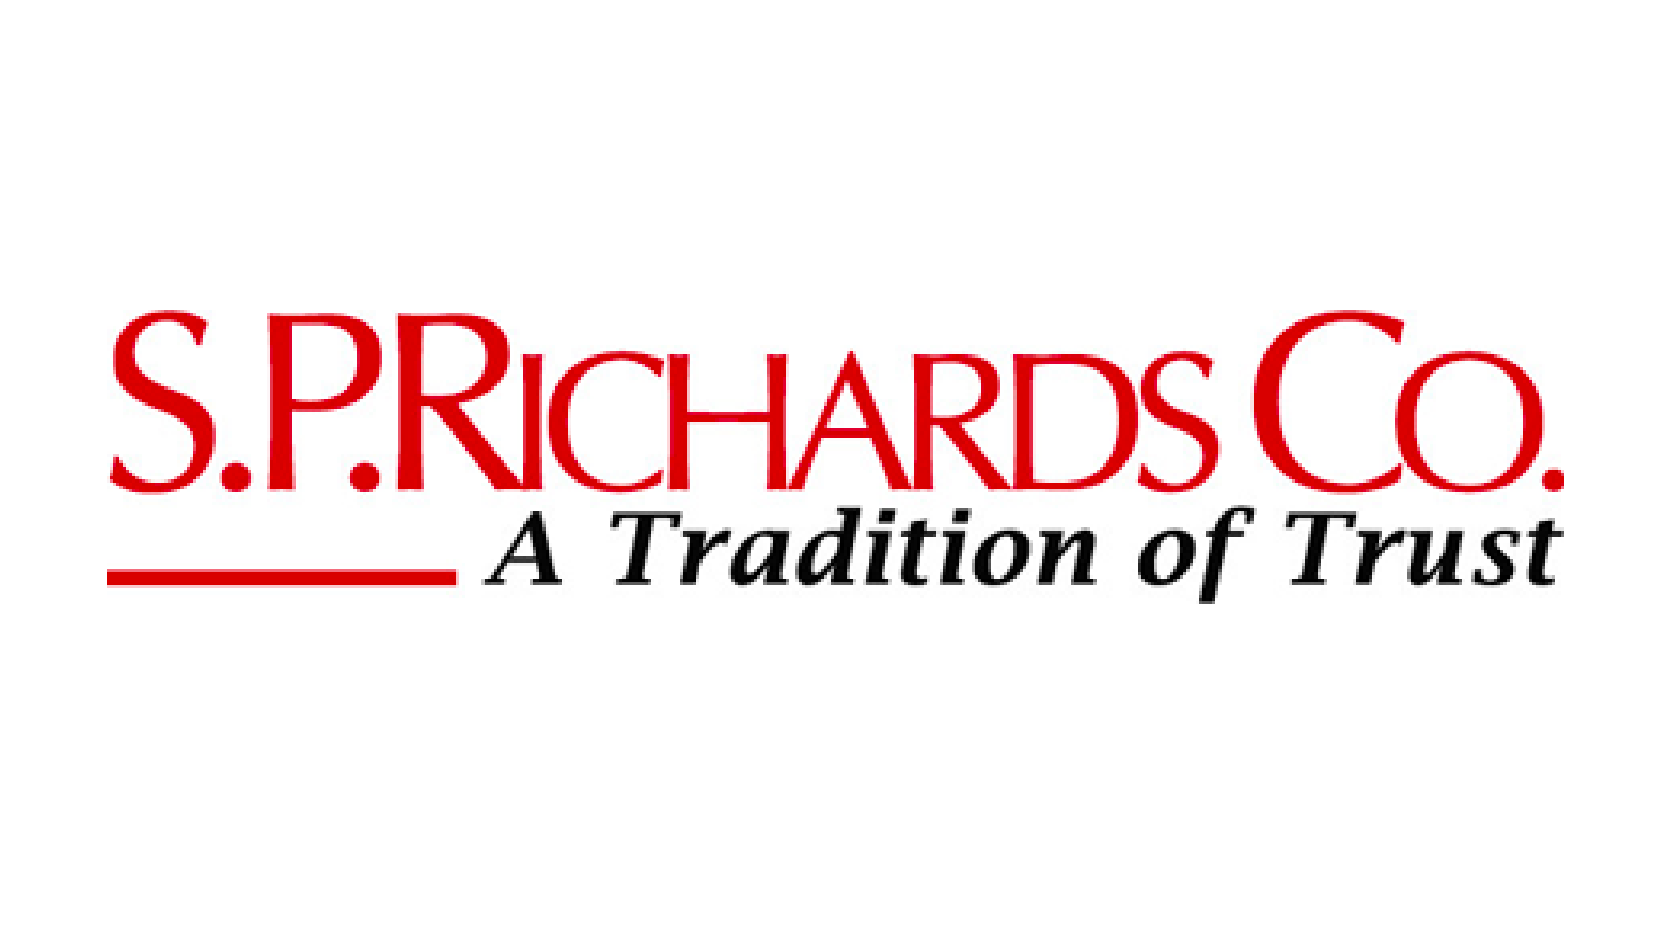 SP Richards Co